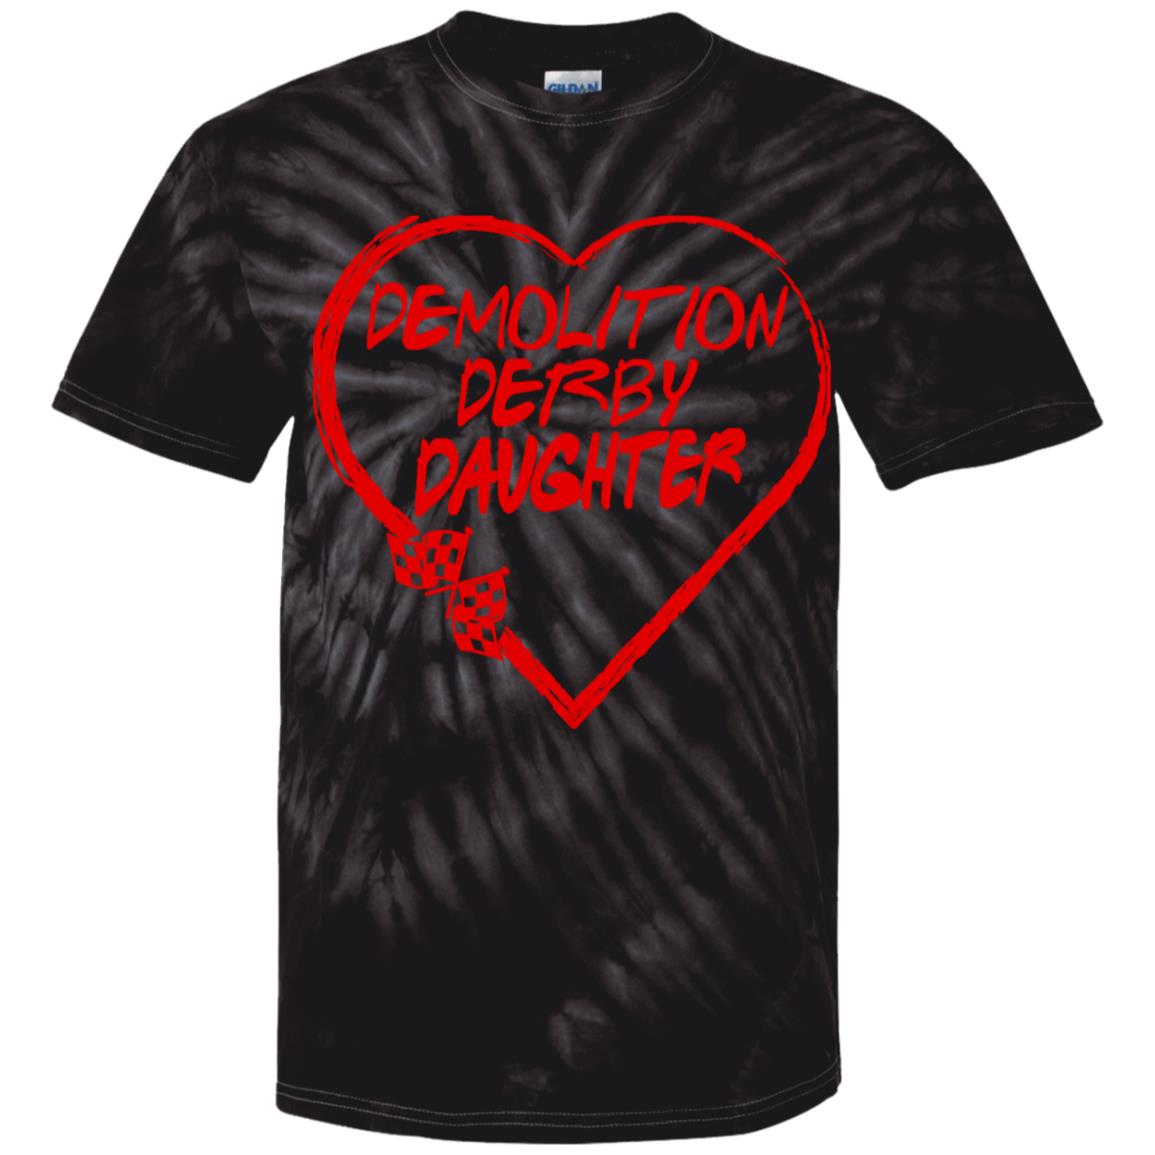 Demolition Derby Daughter Heart Youth Tie Dye T-Shirt